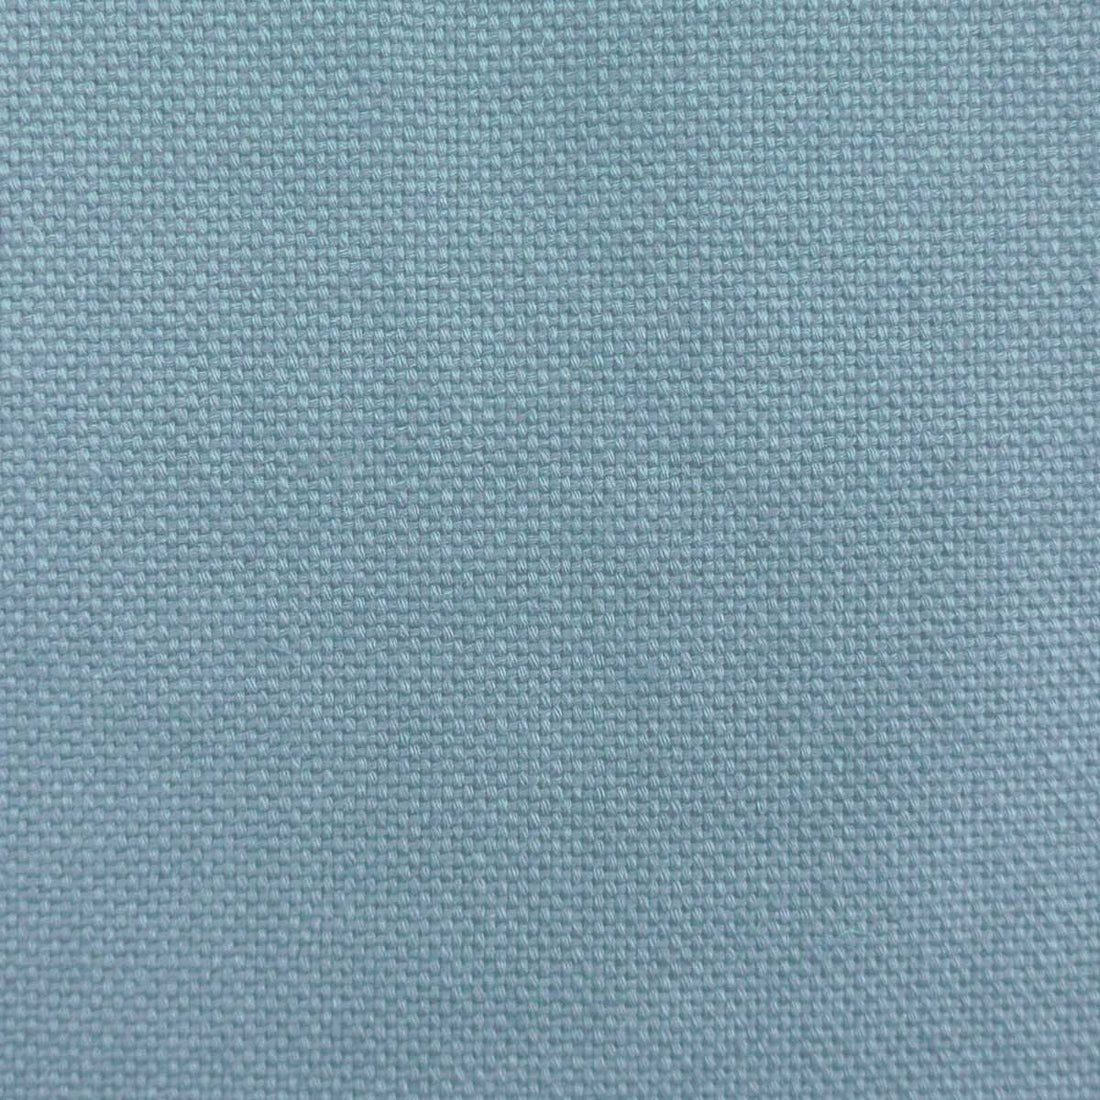 Dobra fabric in azul medio color - pattern LCT1075.042.0 - by Gaston y Daniela in the Lorenzo Castillo VII The Rectory collection